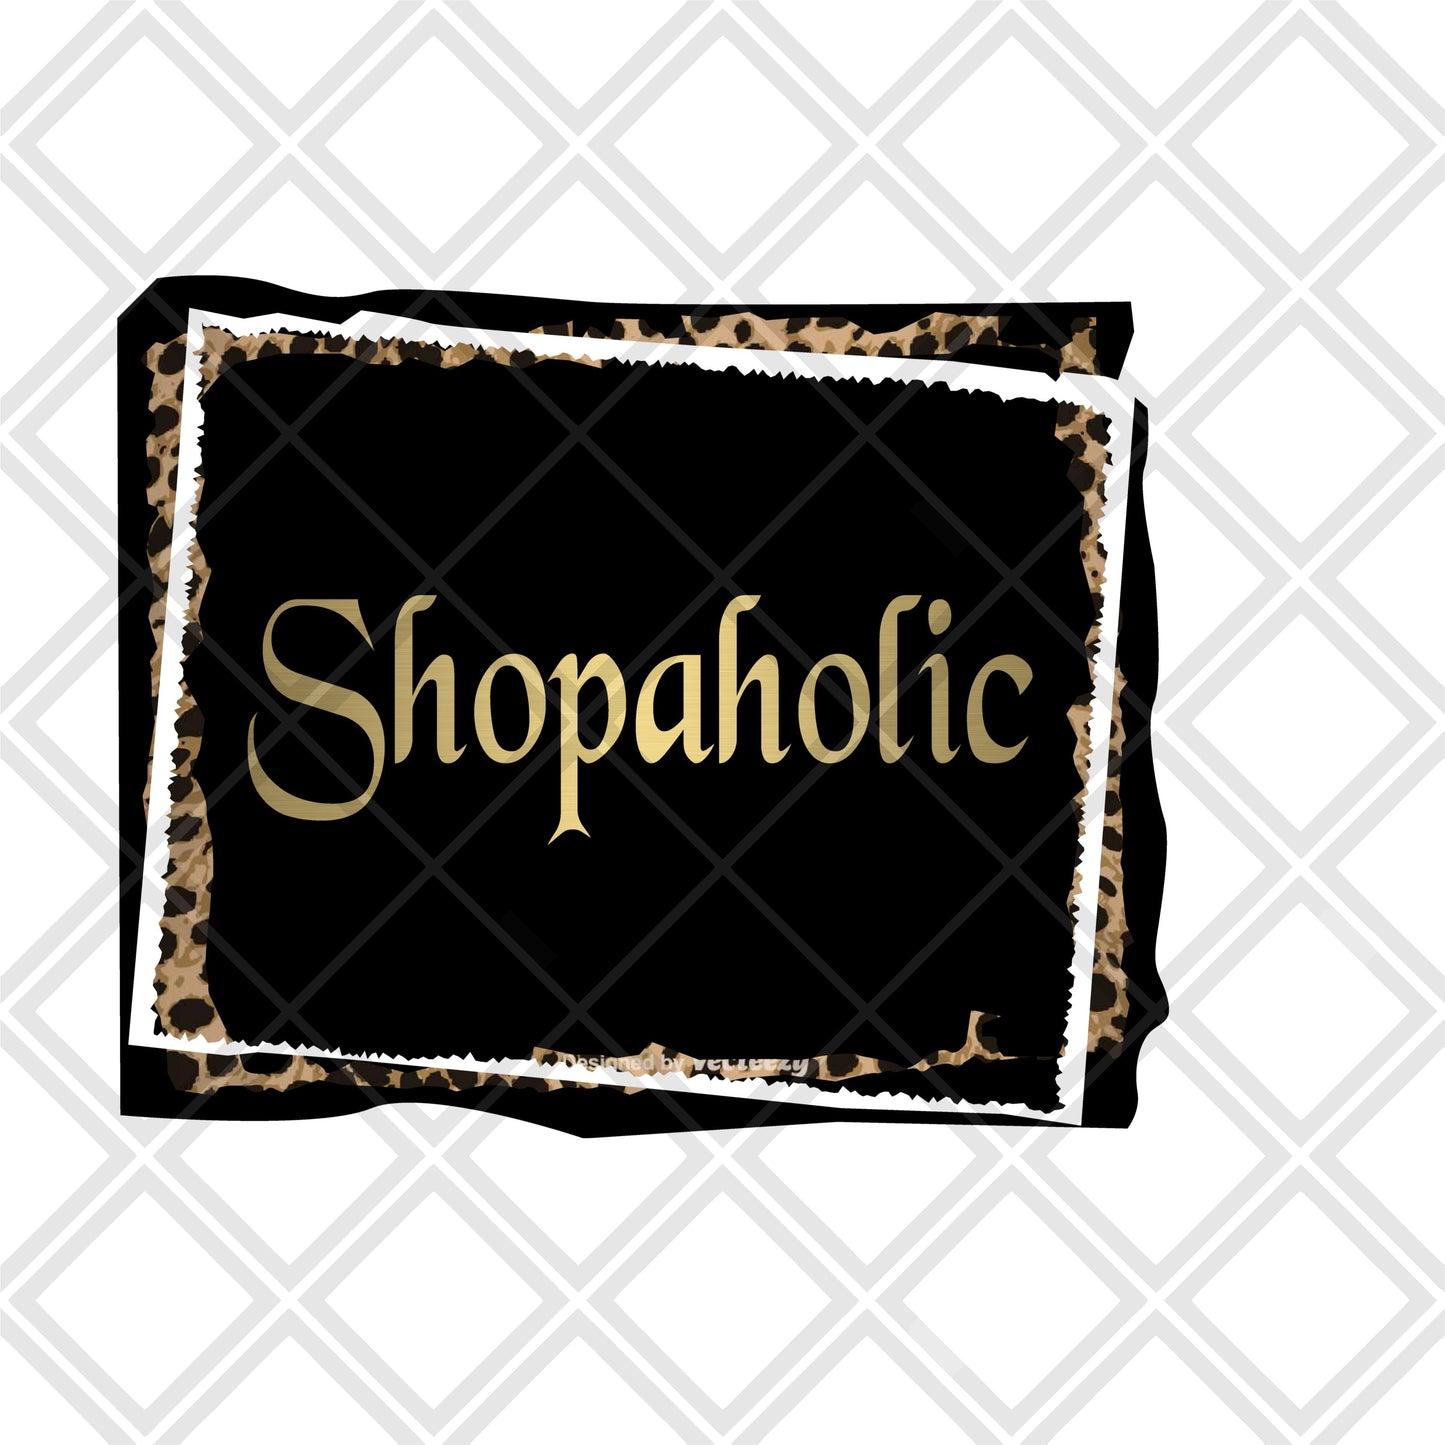 Shopaholic Shopping Frame DTF TRANSFERPRINT TO ORDER